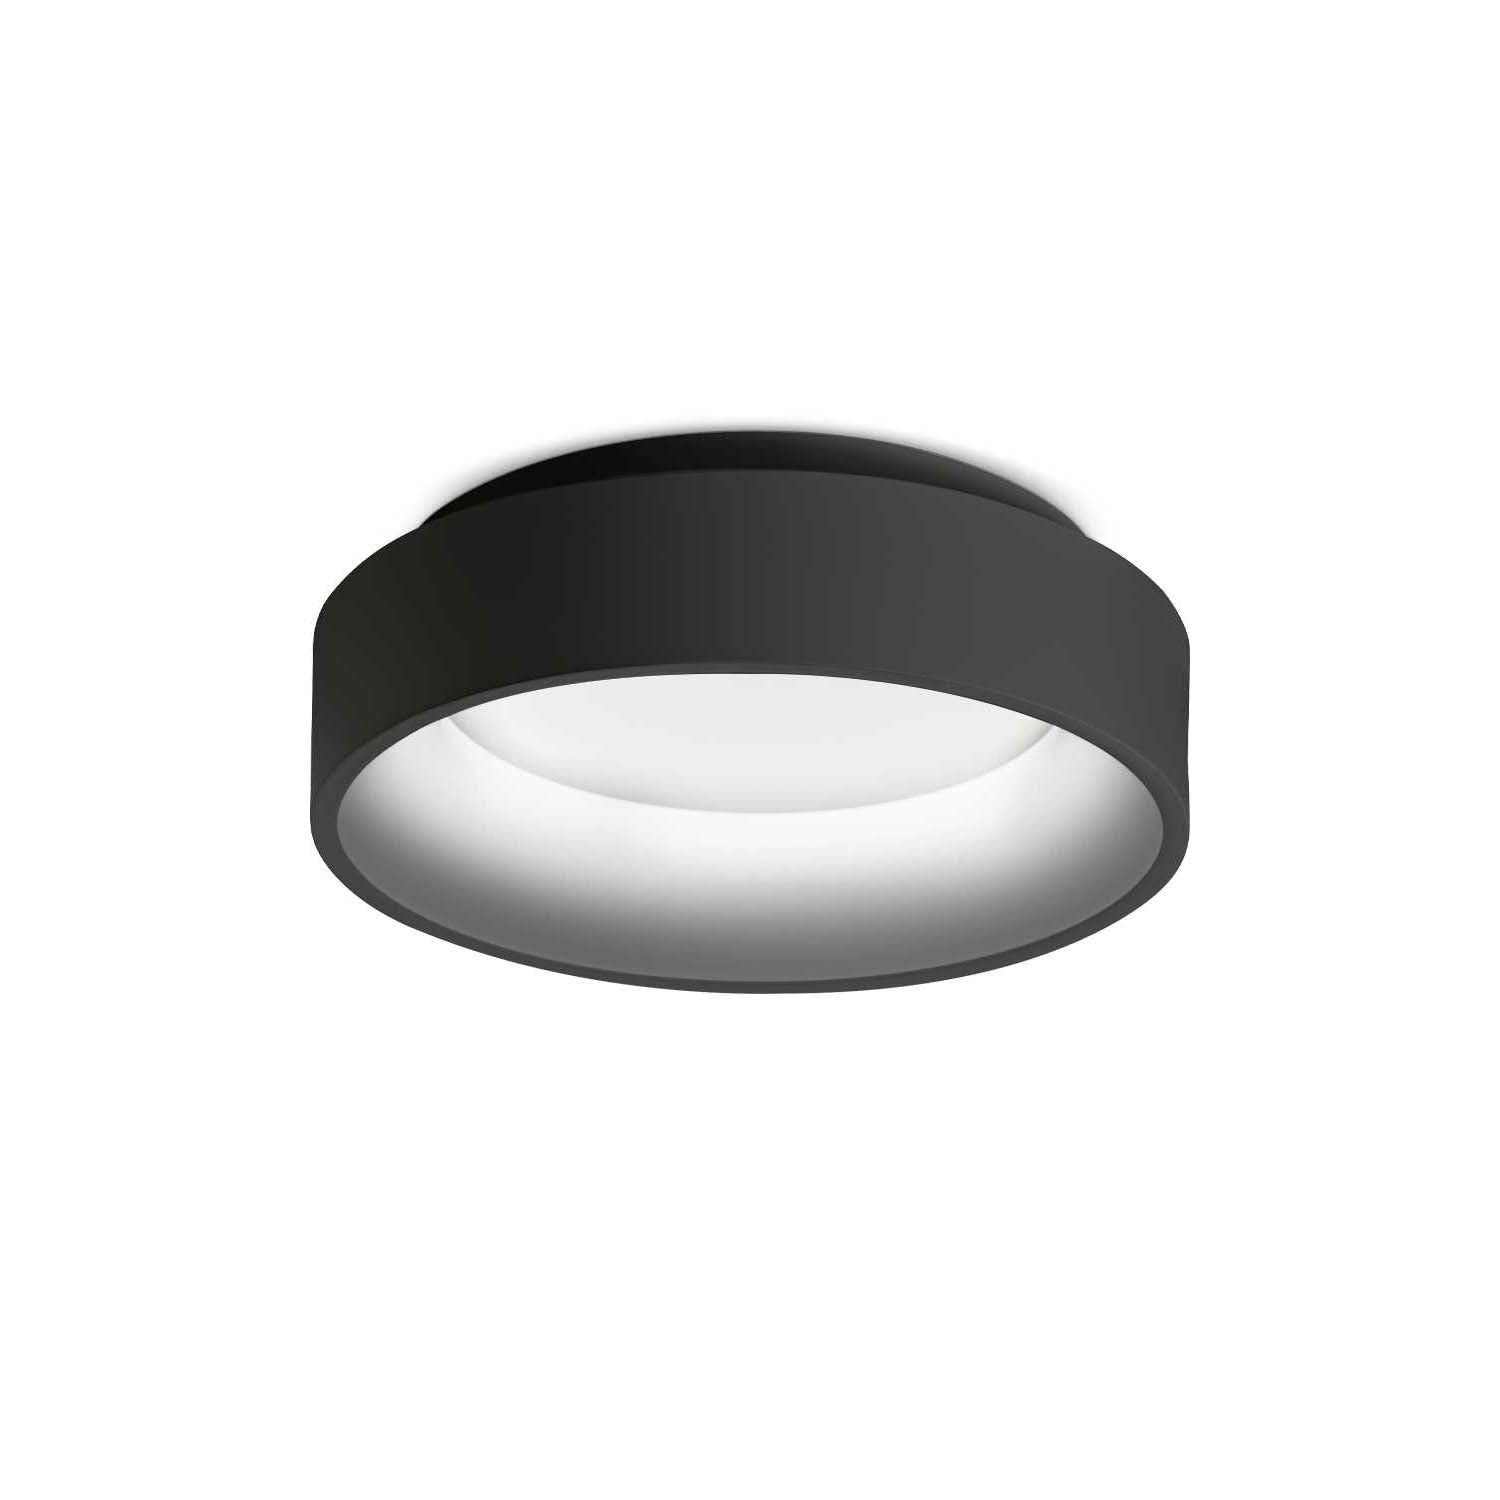 ZIGGY - Plafonnier rond design, blanc ou noir, grand diamètre